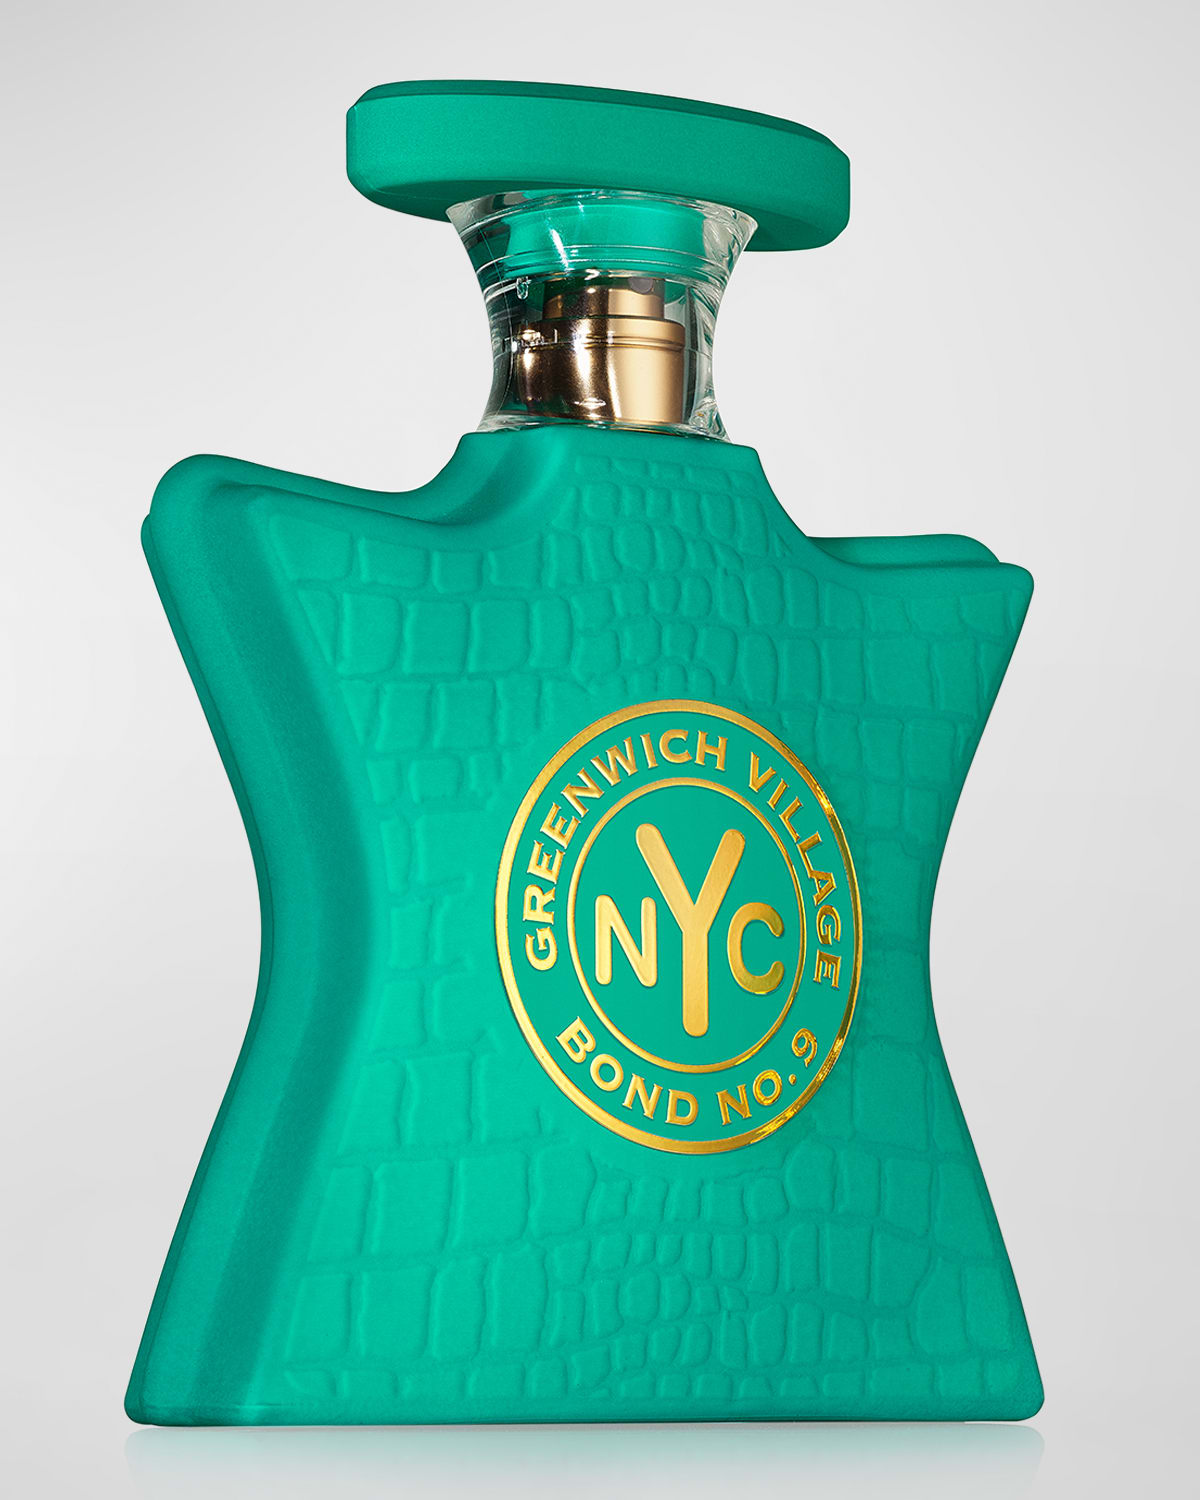 Bond No.9 New York Greenwich Village Eau de Parfum, 1.7 oz.